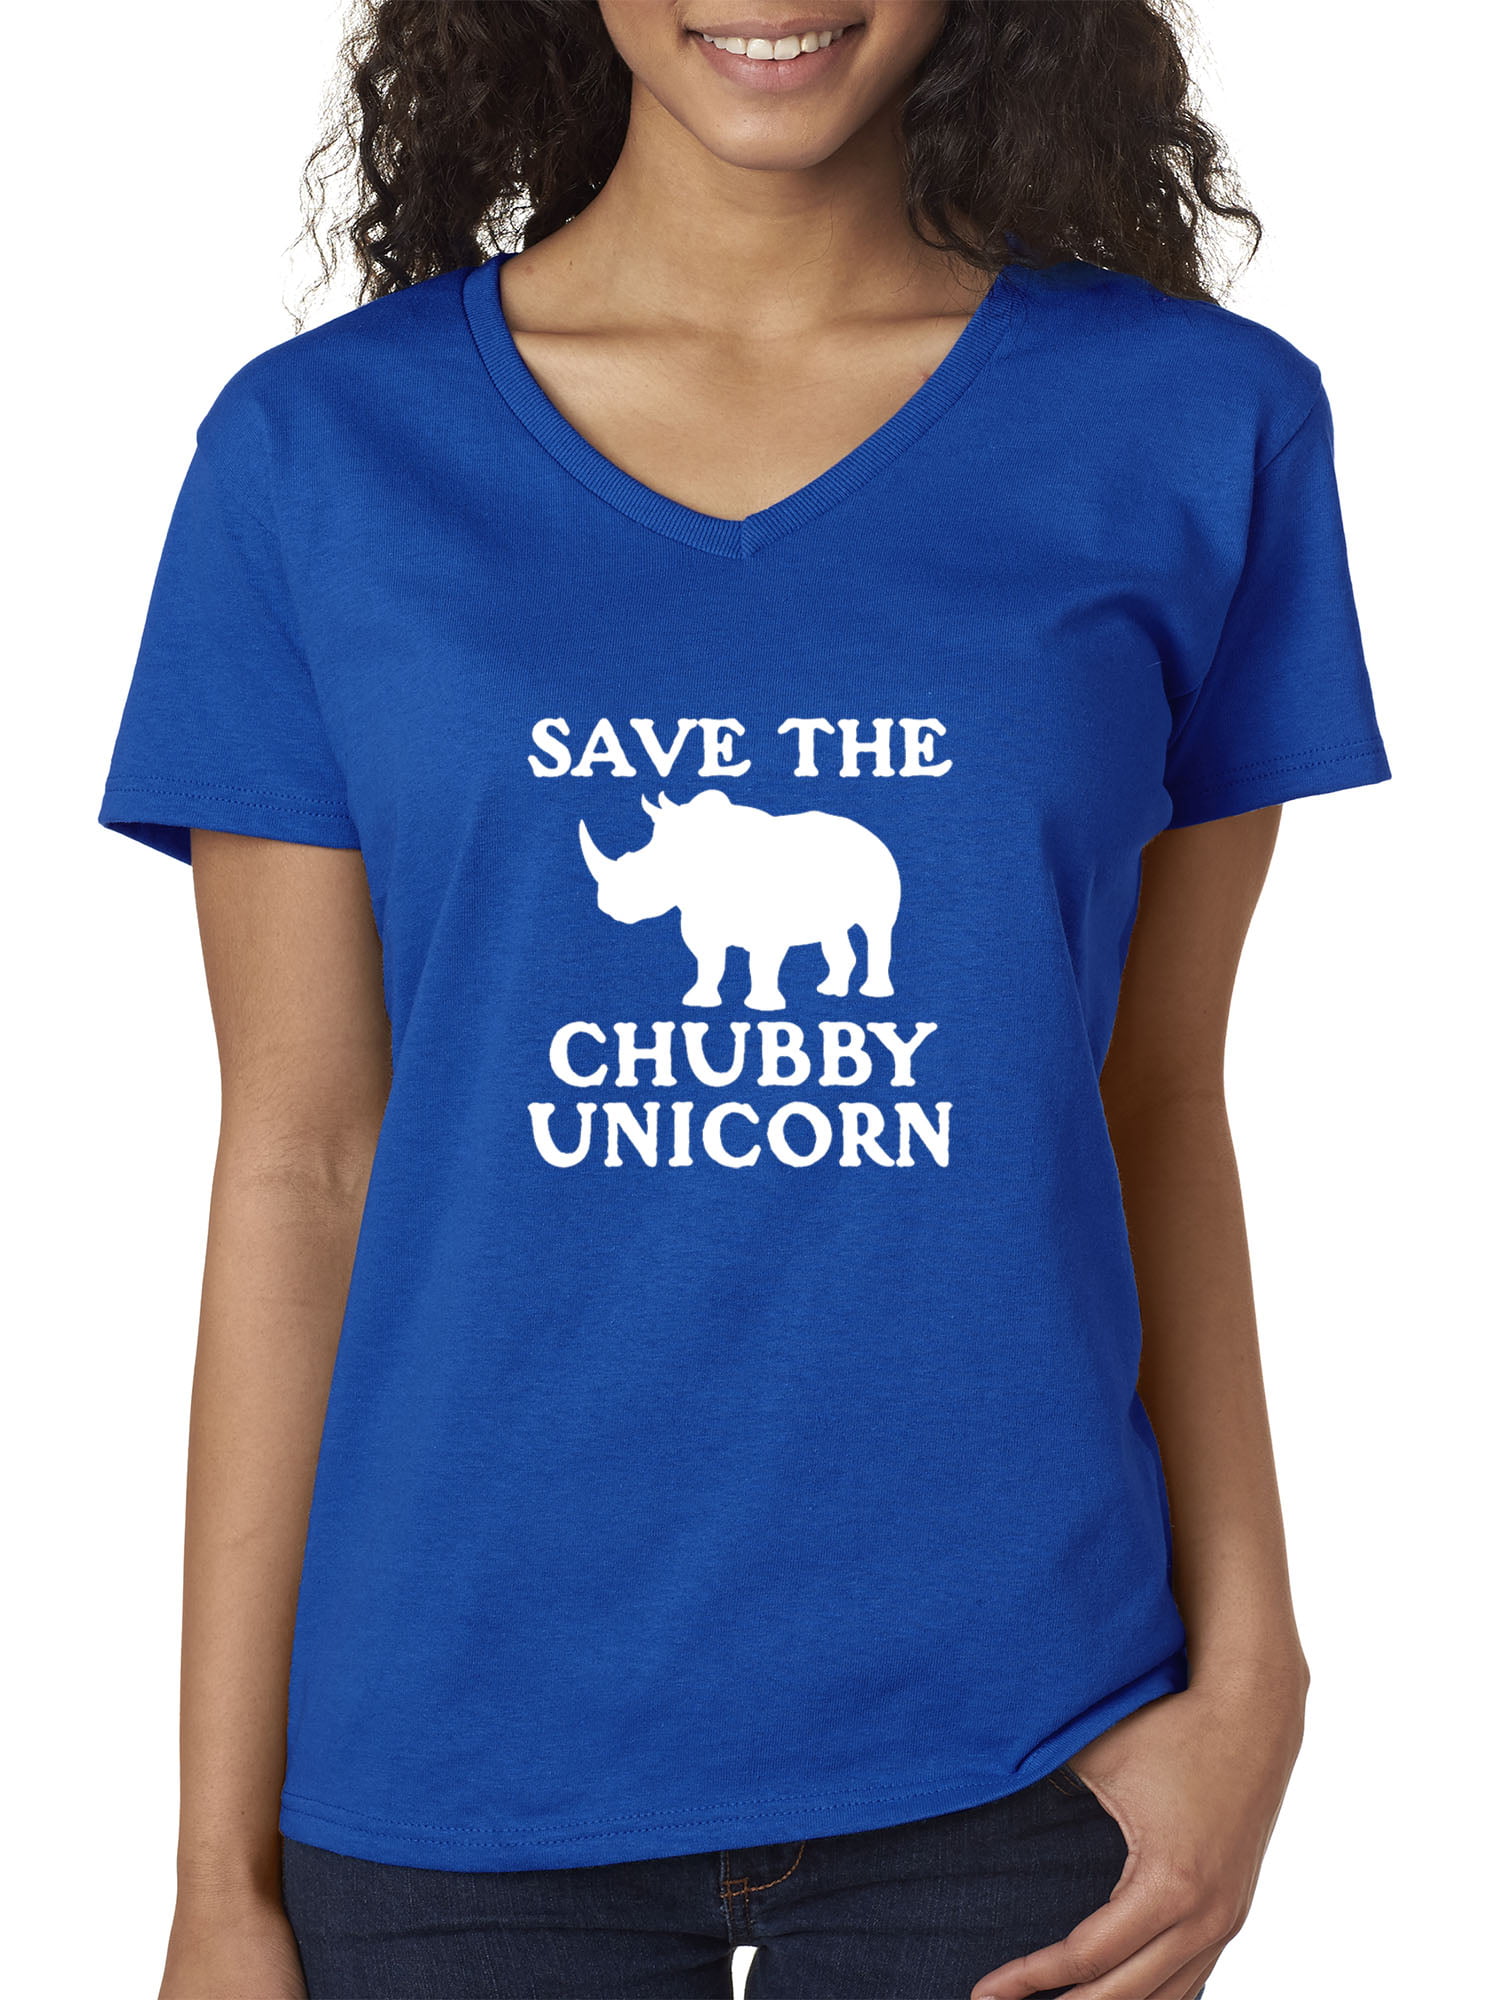 Tstars Save The Chubby Unicorns Rhino Funny 3/4 Women Sleeve Baseball Jersey Shirt